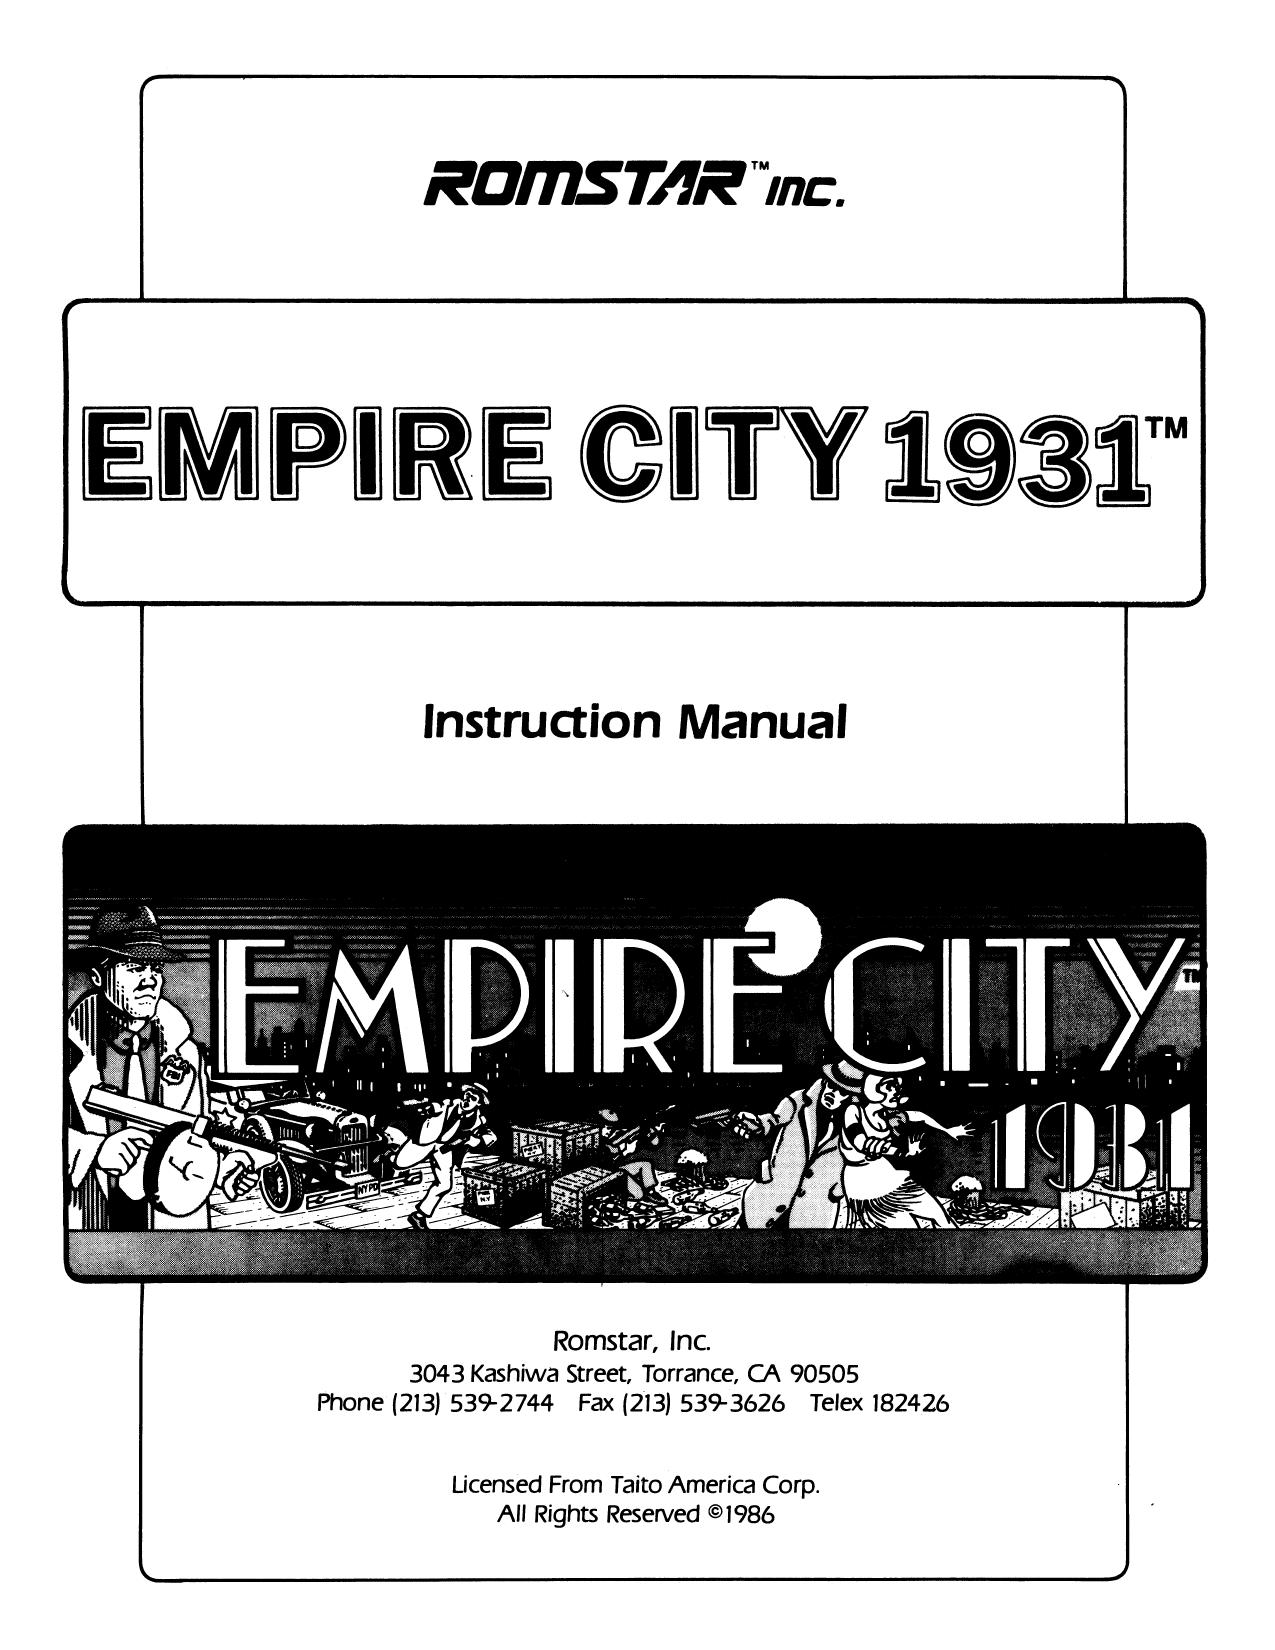 Empire City 1931